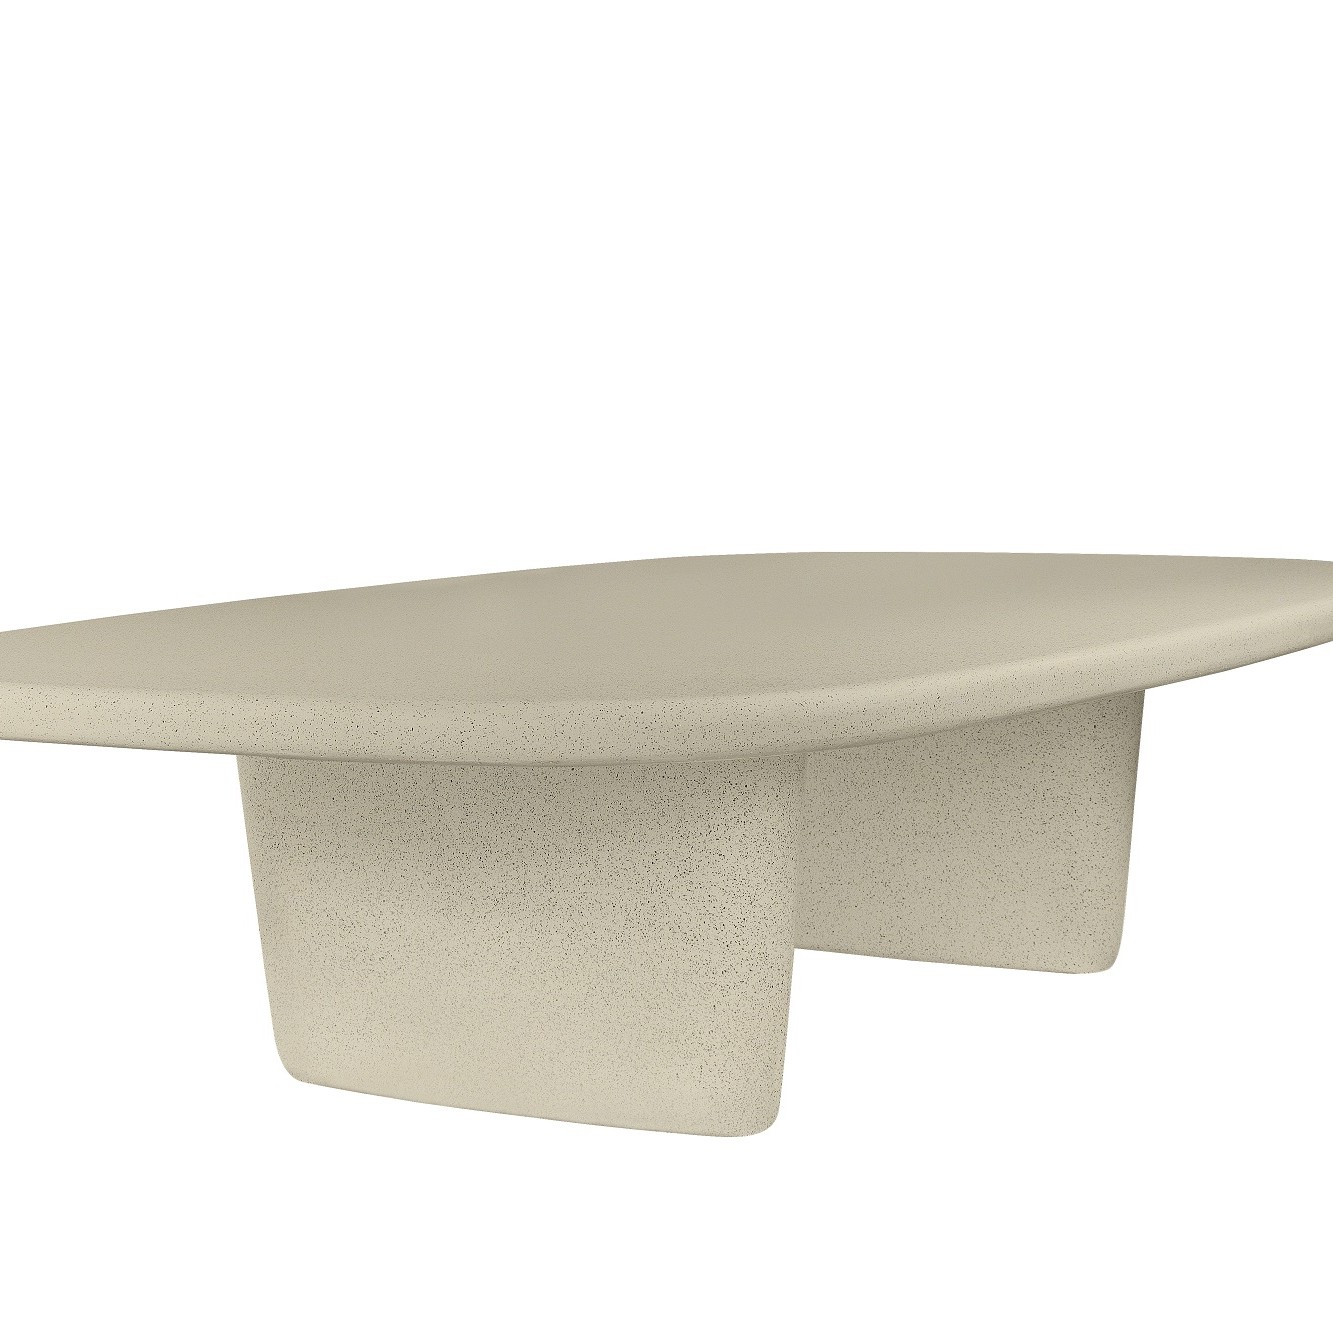 Mes amo concrete coffee table by Urbi et orbi i low res